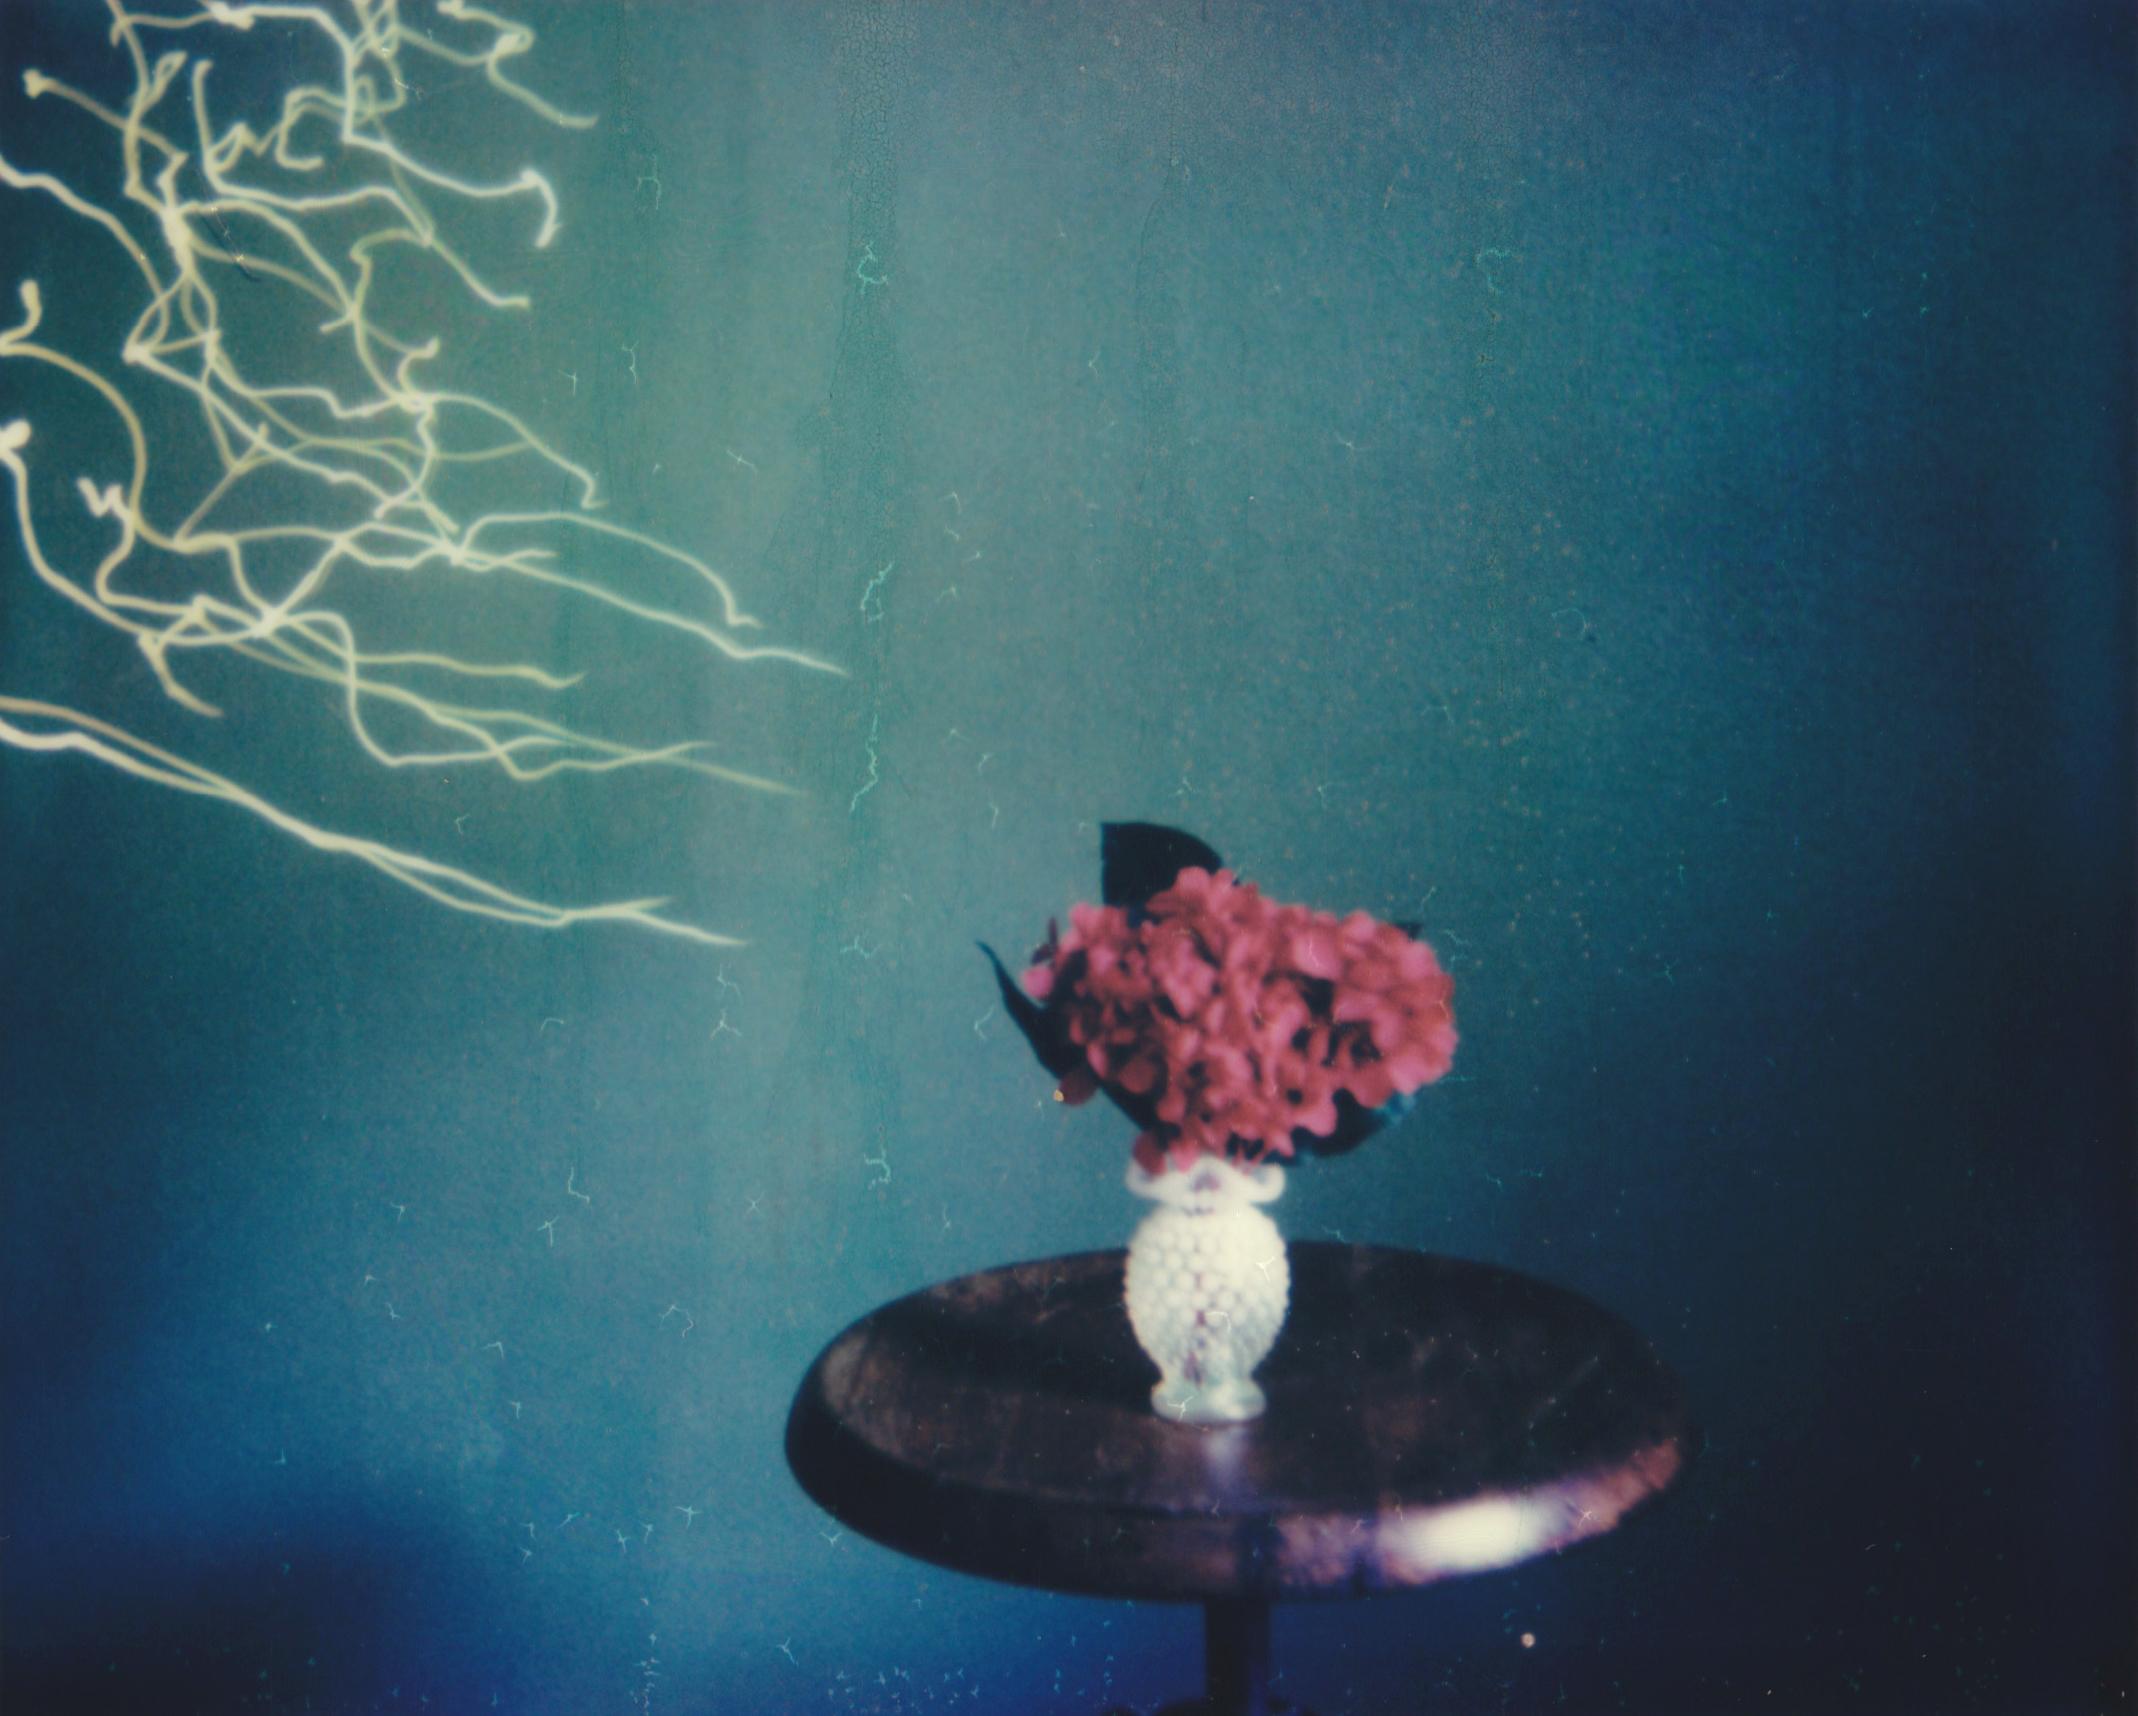 Figurative Photograph Lisa Toboz - In Bloom - Contemporain, Figuratif, Femme, Polaroid, XXIe Siècle